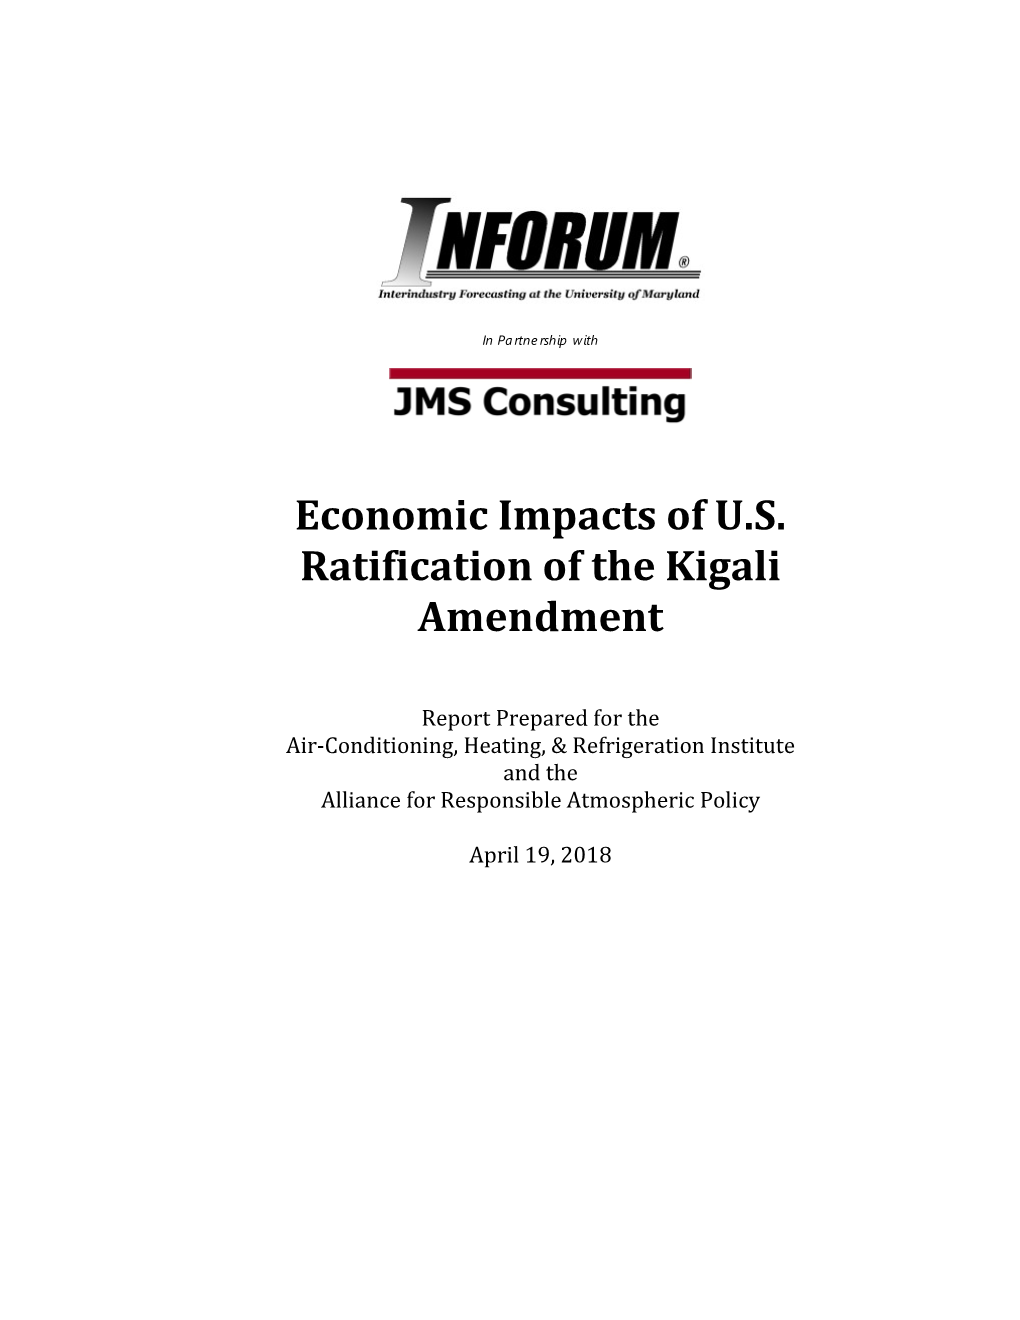 Economic Impacts of U.S. Ratification of the Kigali Amendment